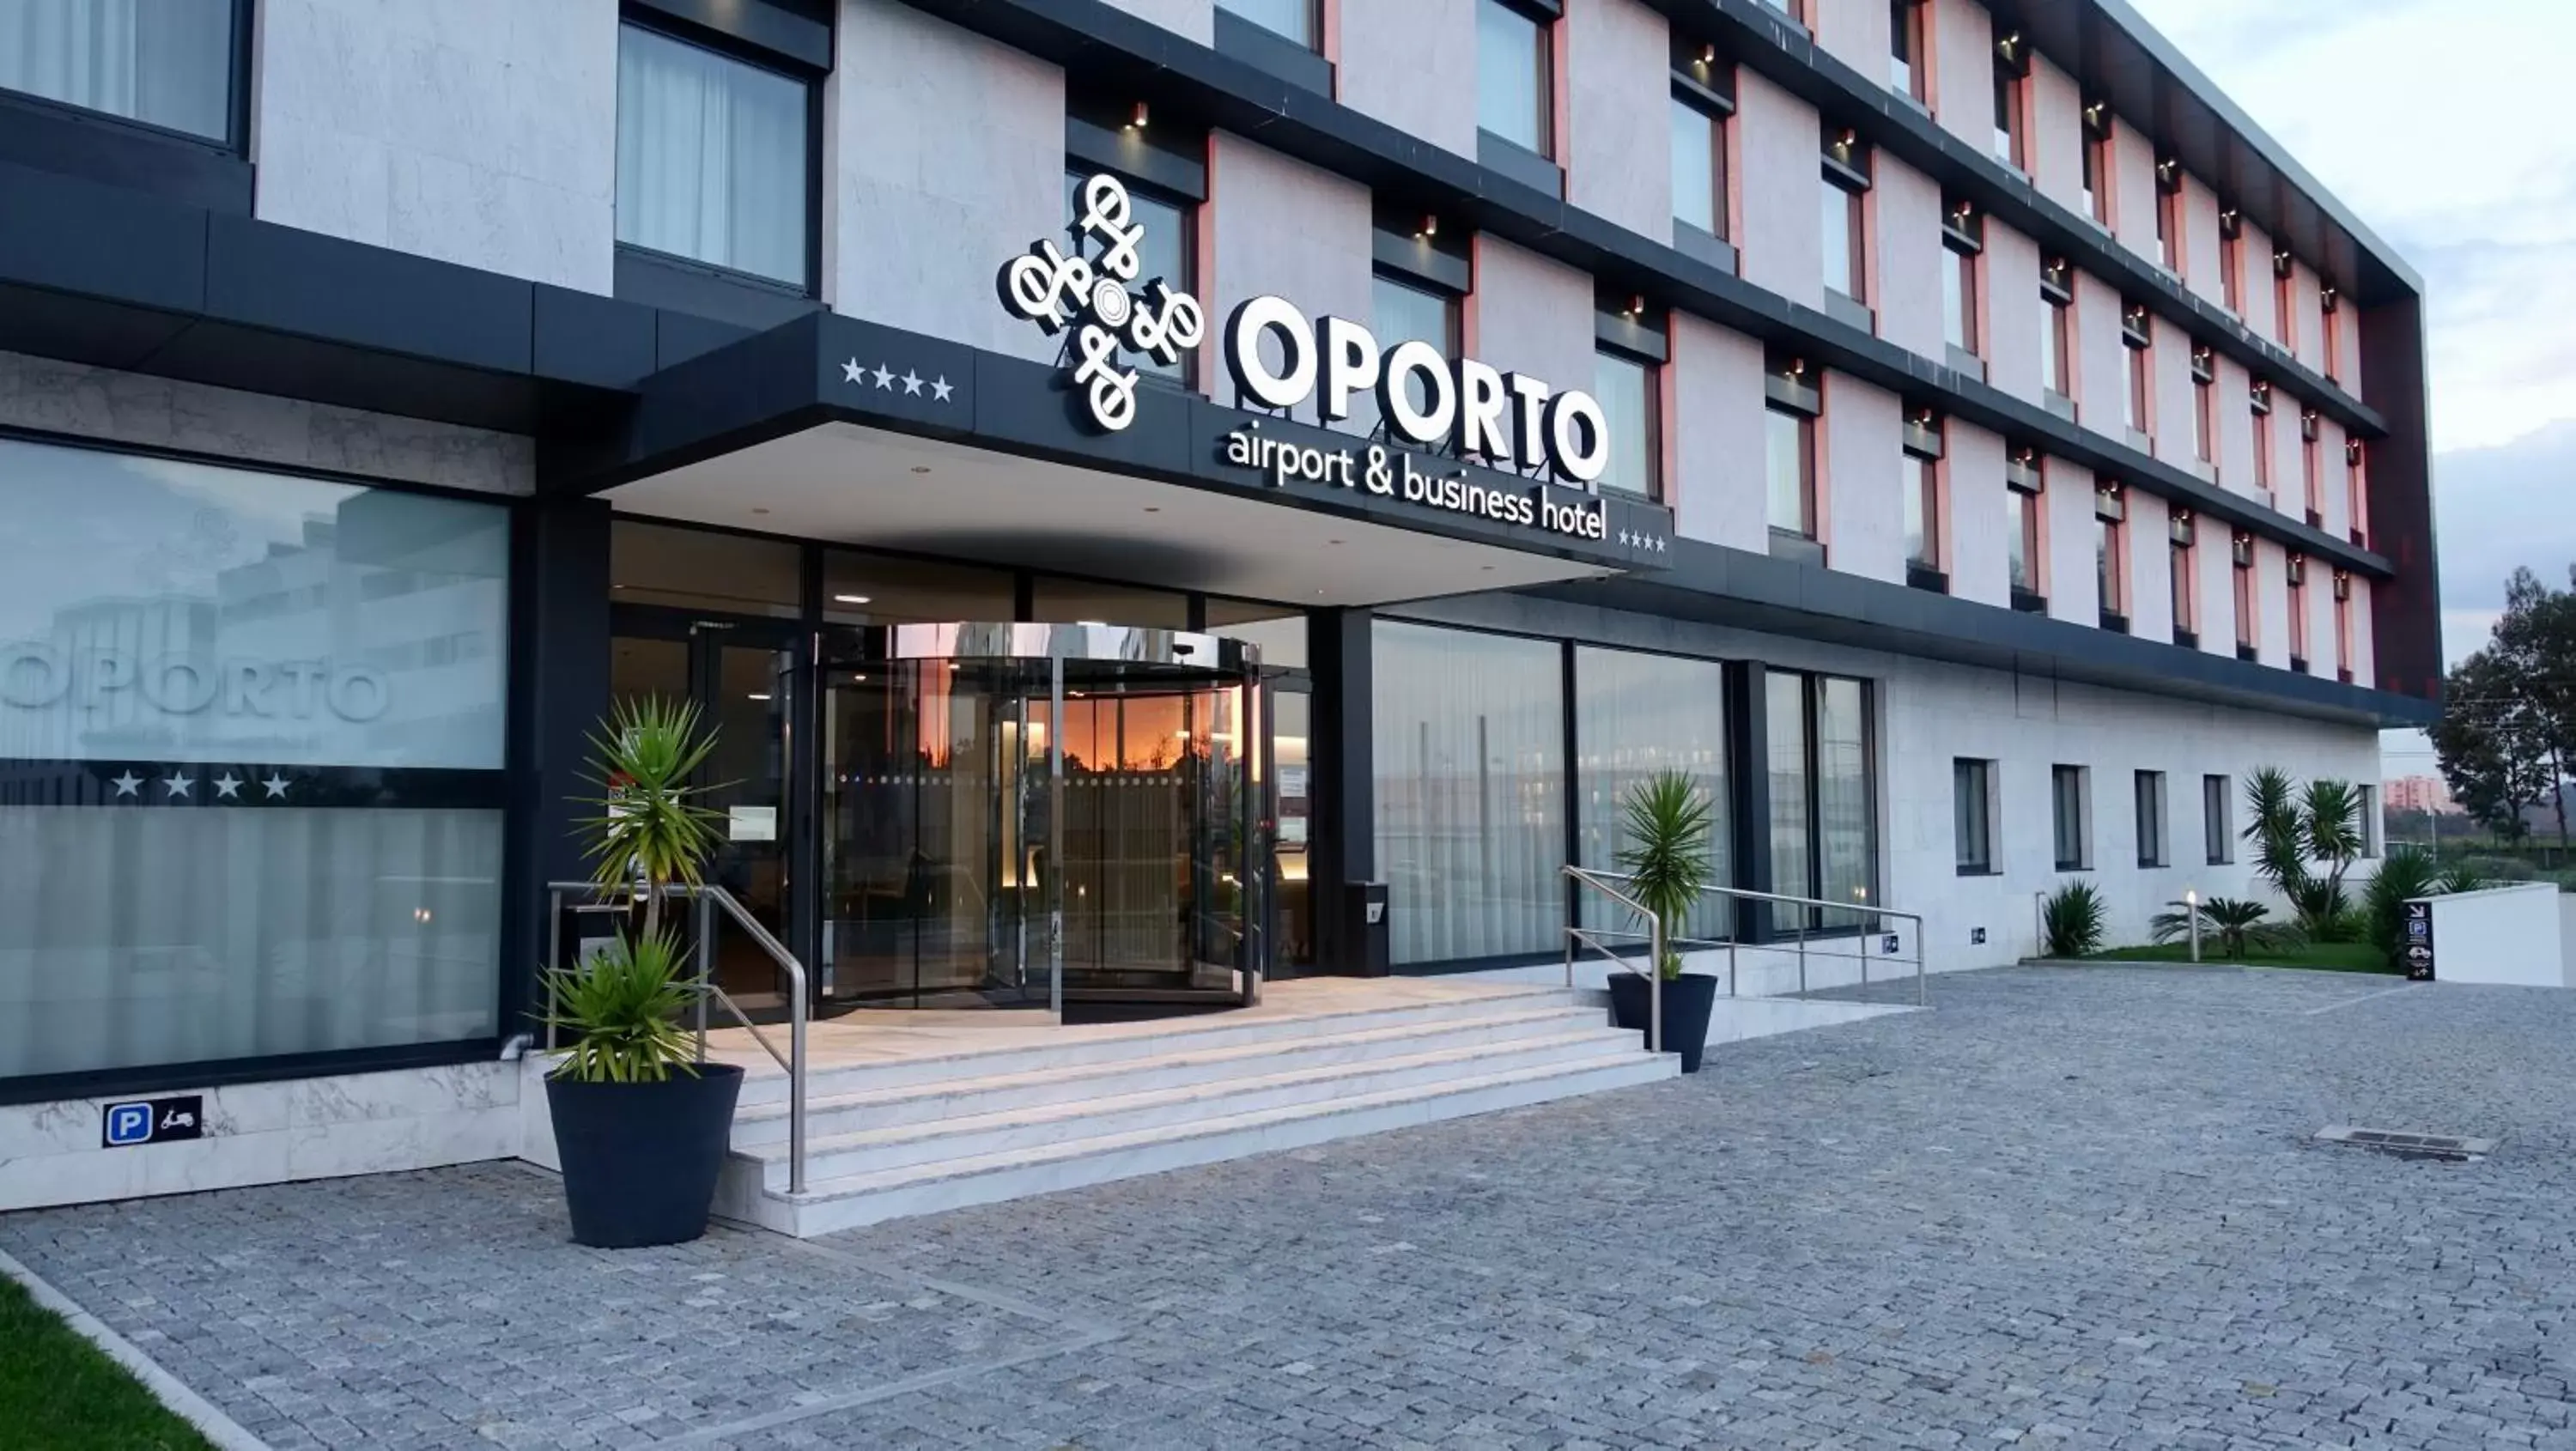 Facade/entrance in Oporto Airport & Business Hotel